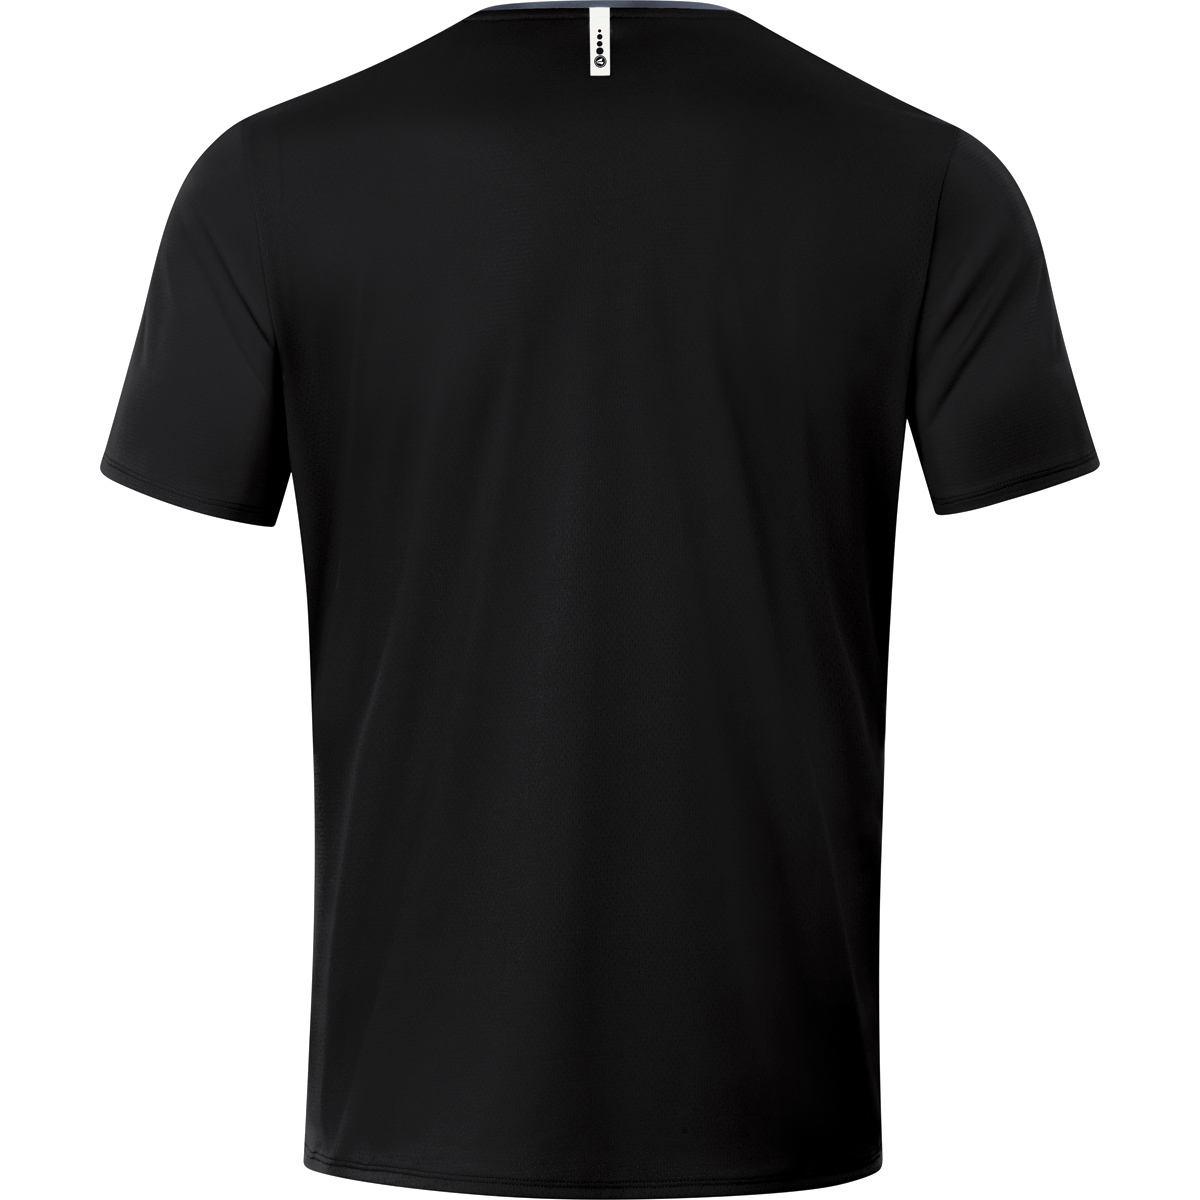 JAKO T-Shirt Champ 2.0 schwarz/anthrazit, Kinder, Gr. 6120 128